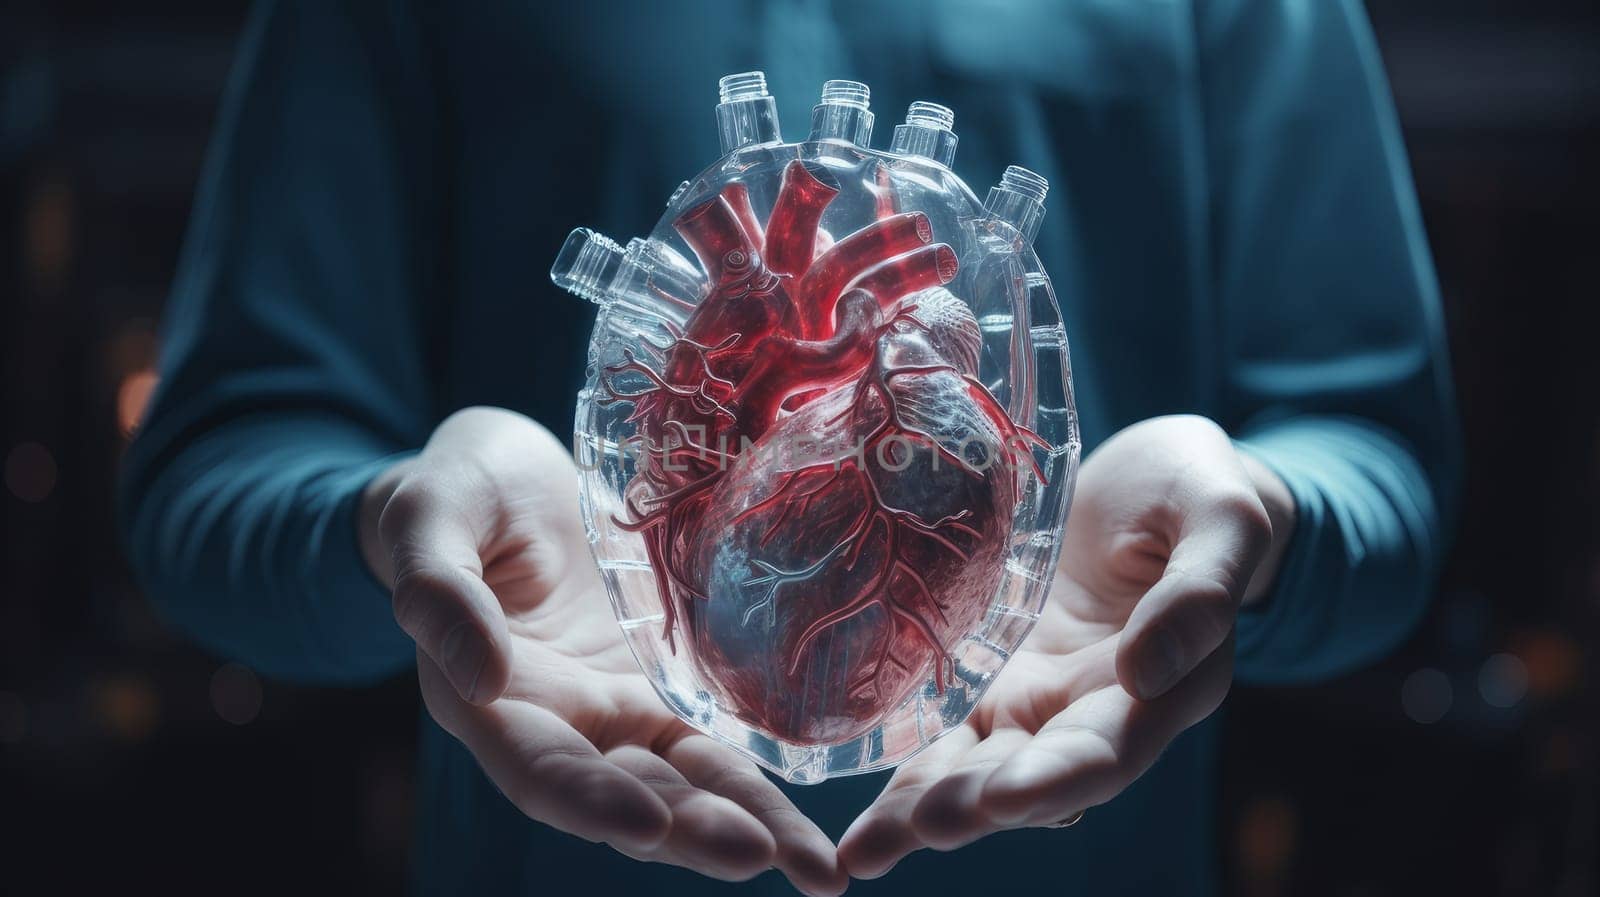 Human heart model,concept of cardiology, health care, human organ transplant. by Alla_Yurtayeva